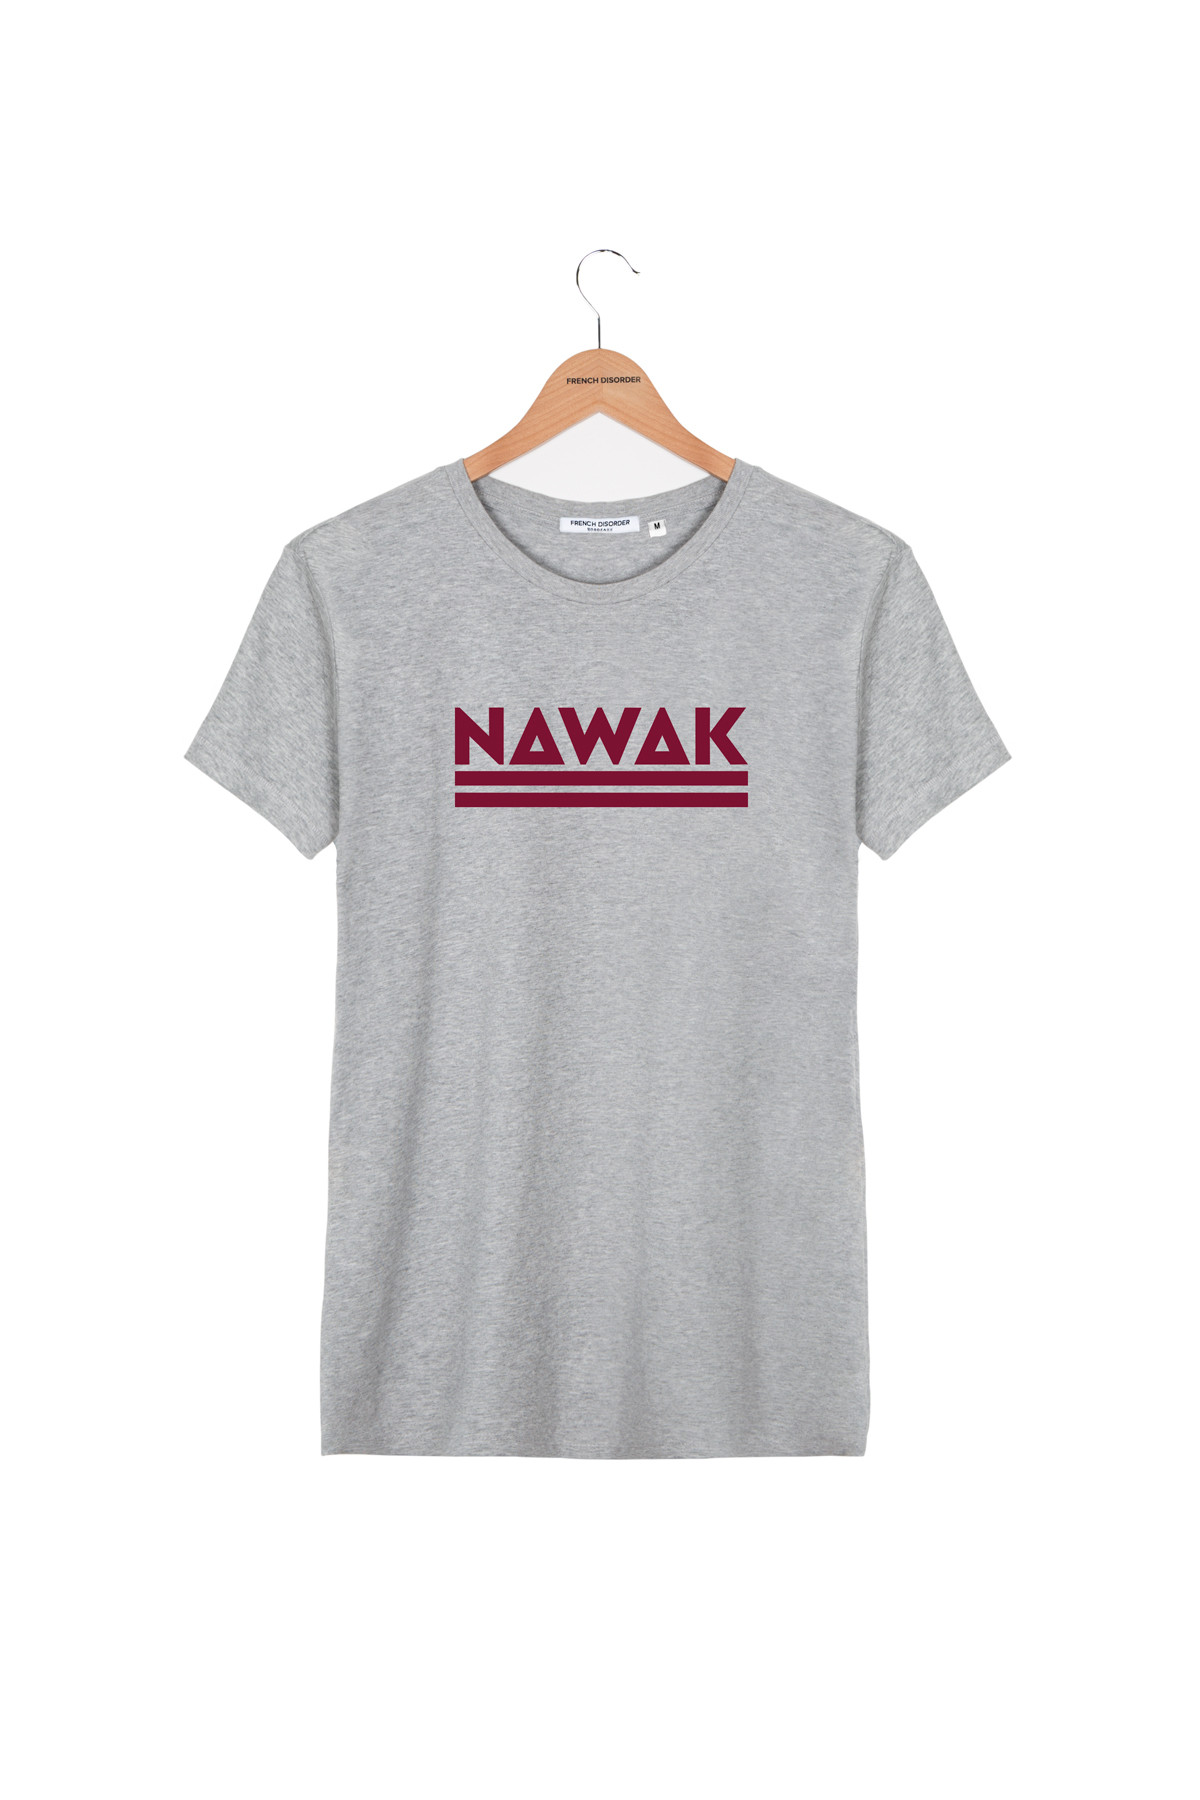 T-shirt NAWAK French Disorder